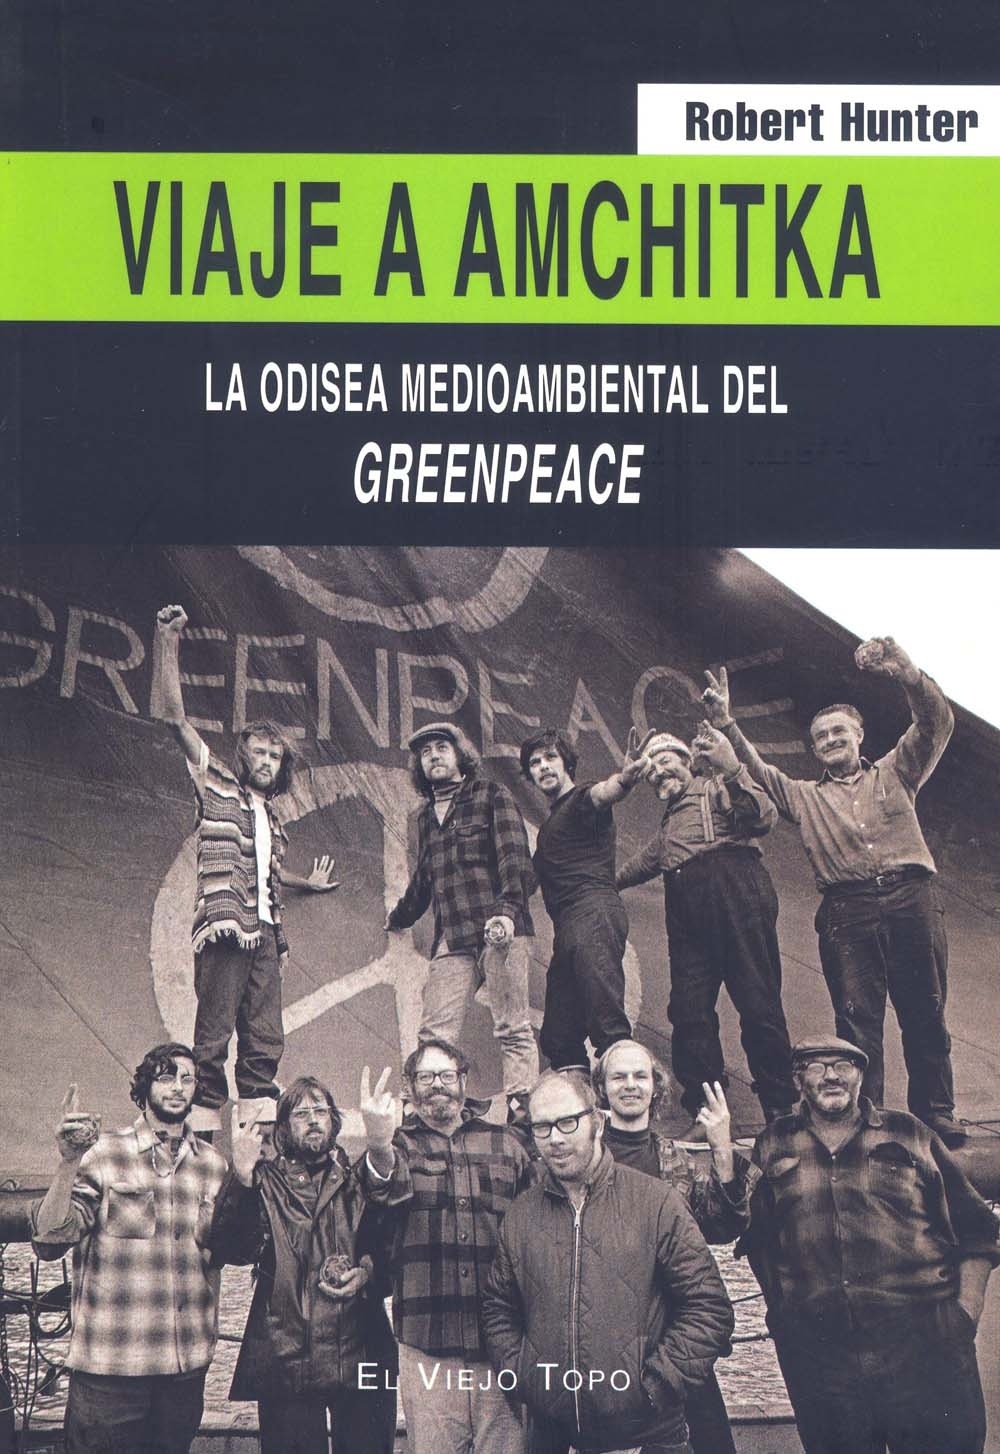 Viaje a Amchitka "La odisea medioambiental del Greenpeace"